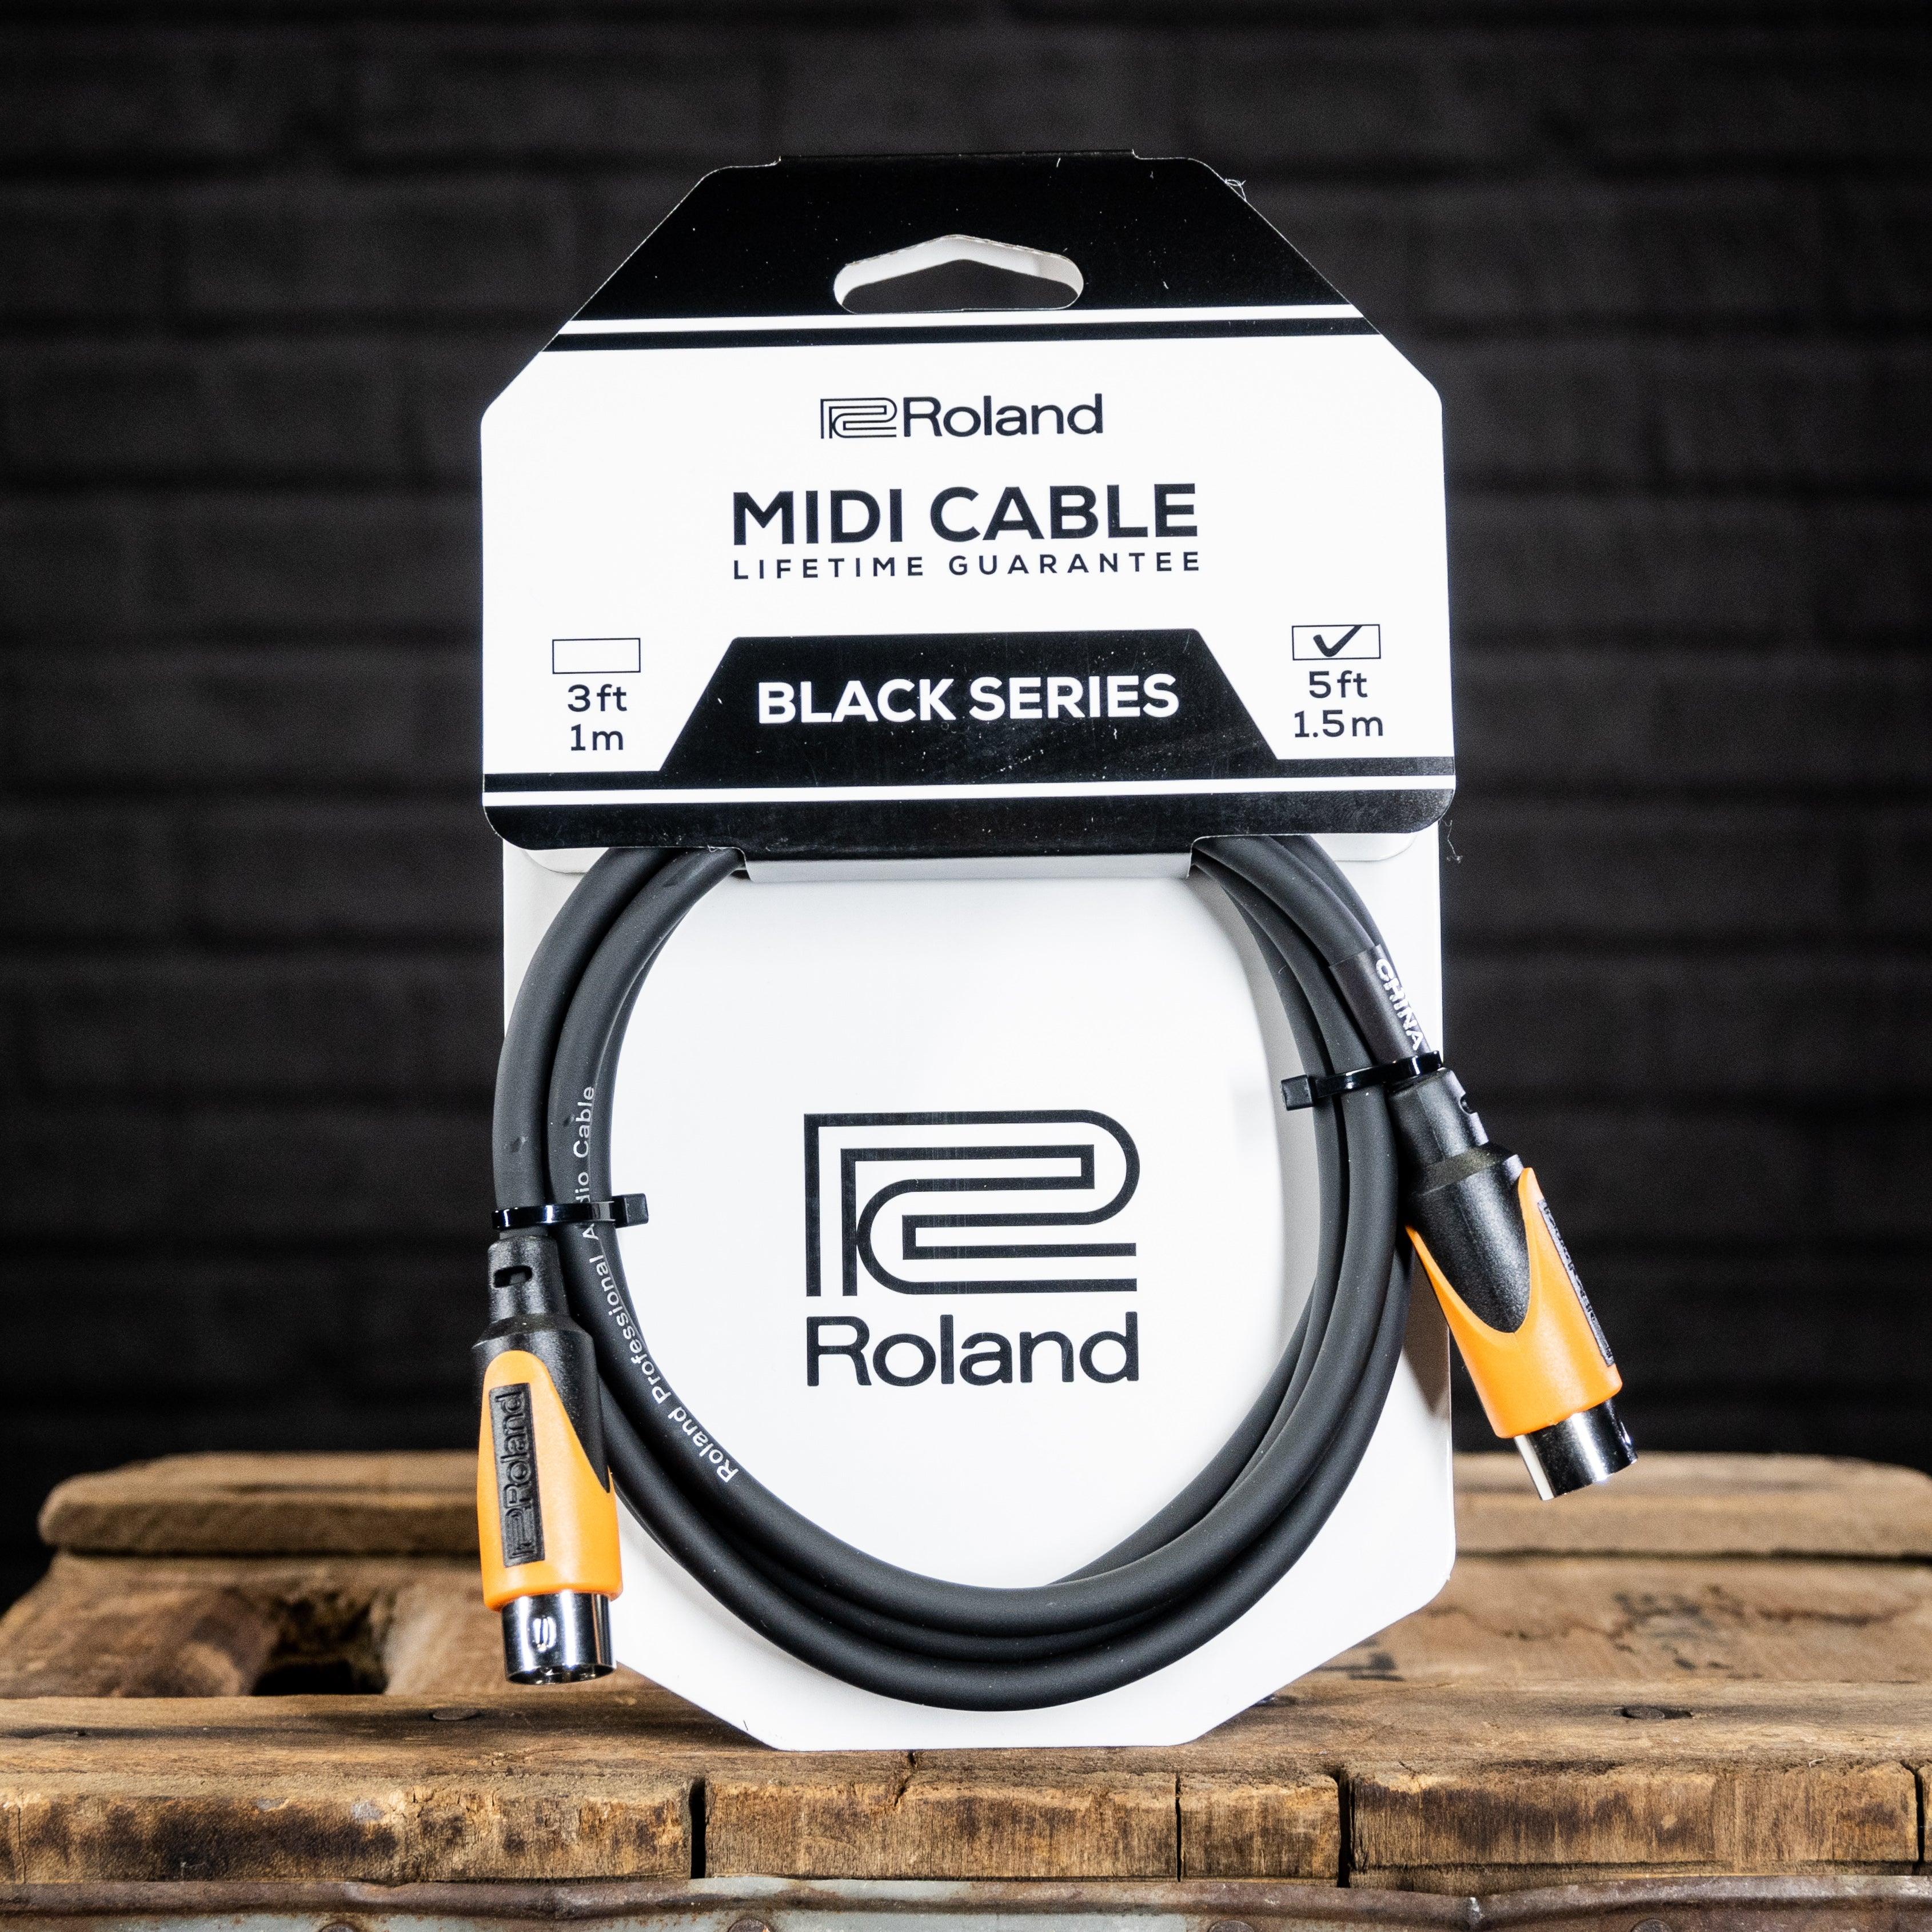 Roland Black Series Midi Cable 5ft. - Impulse Music Co.